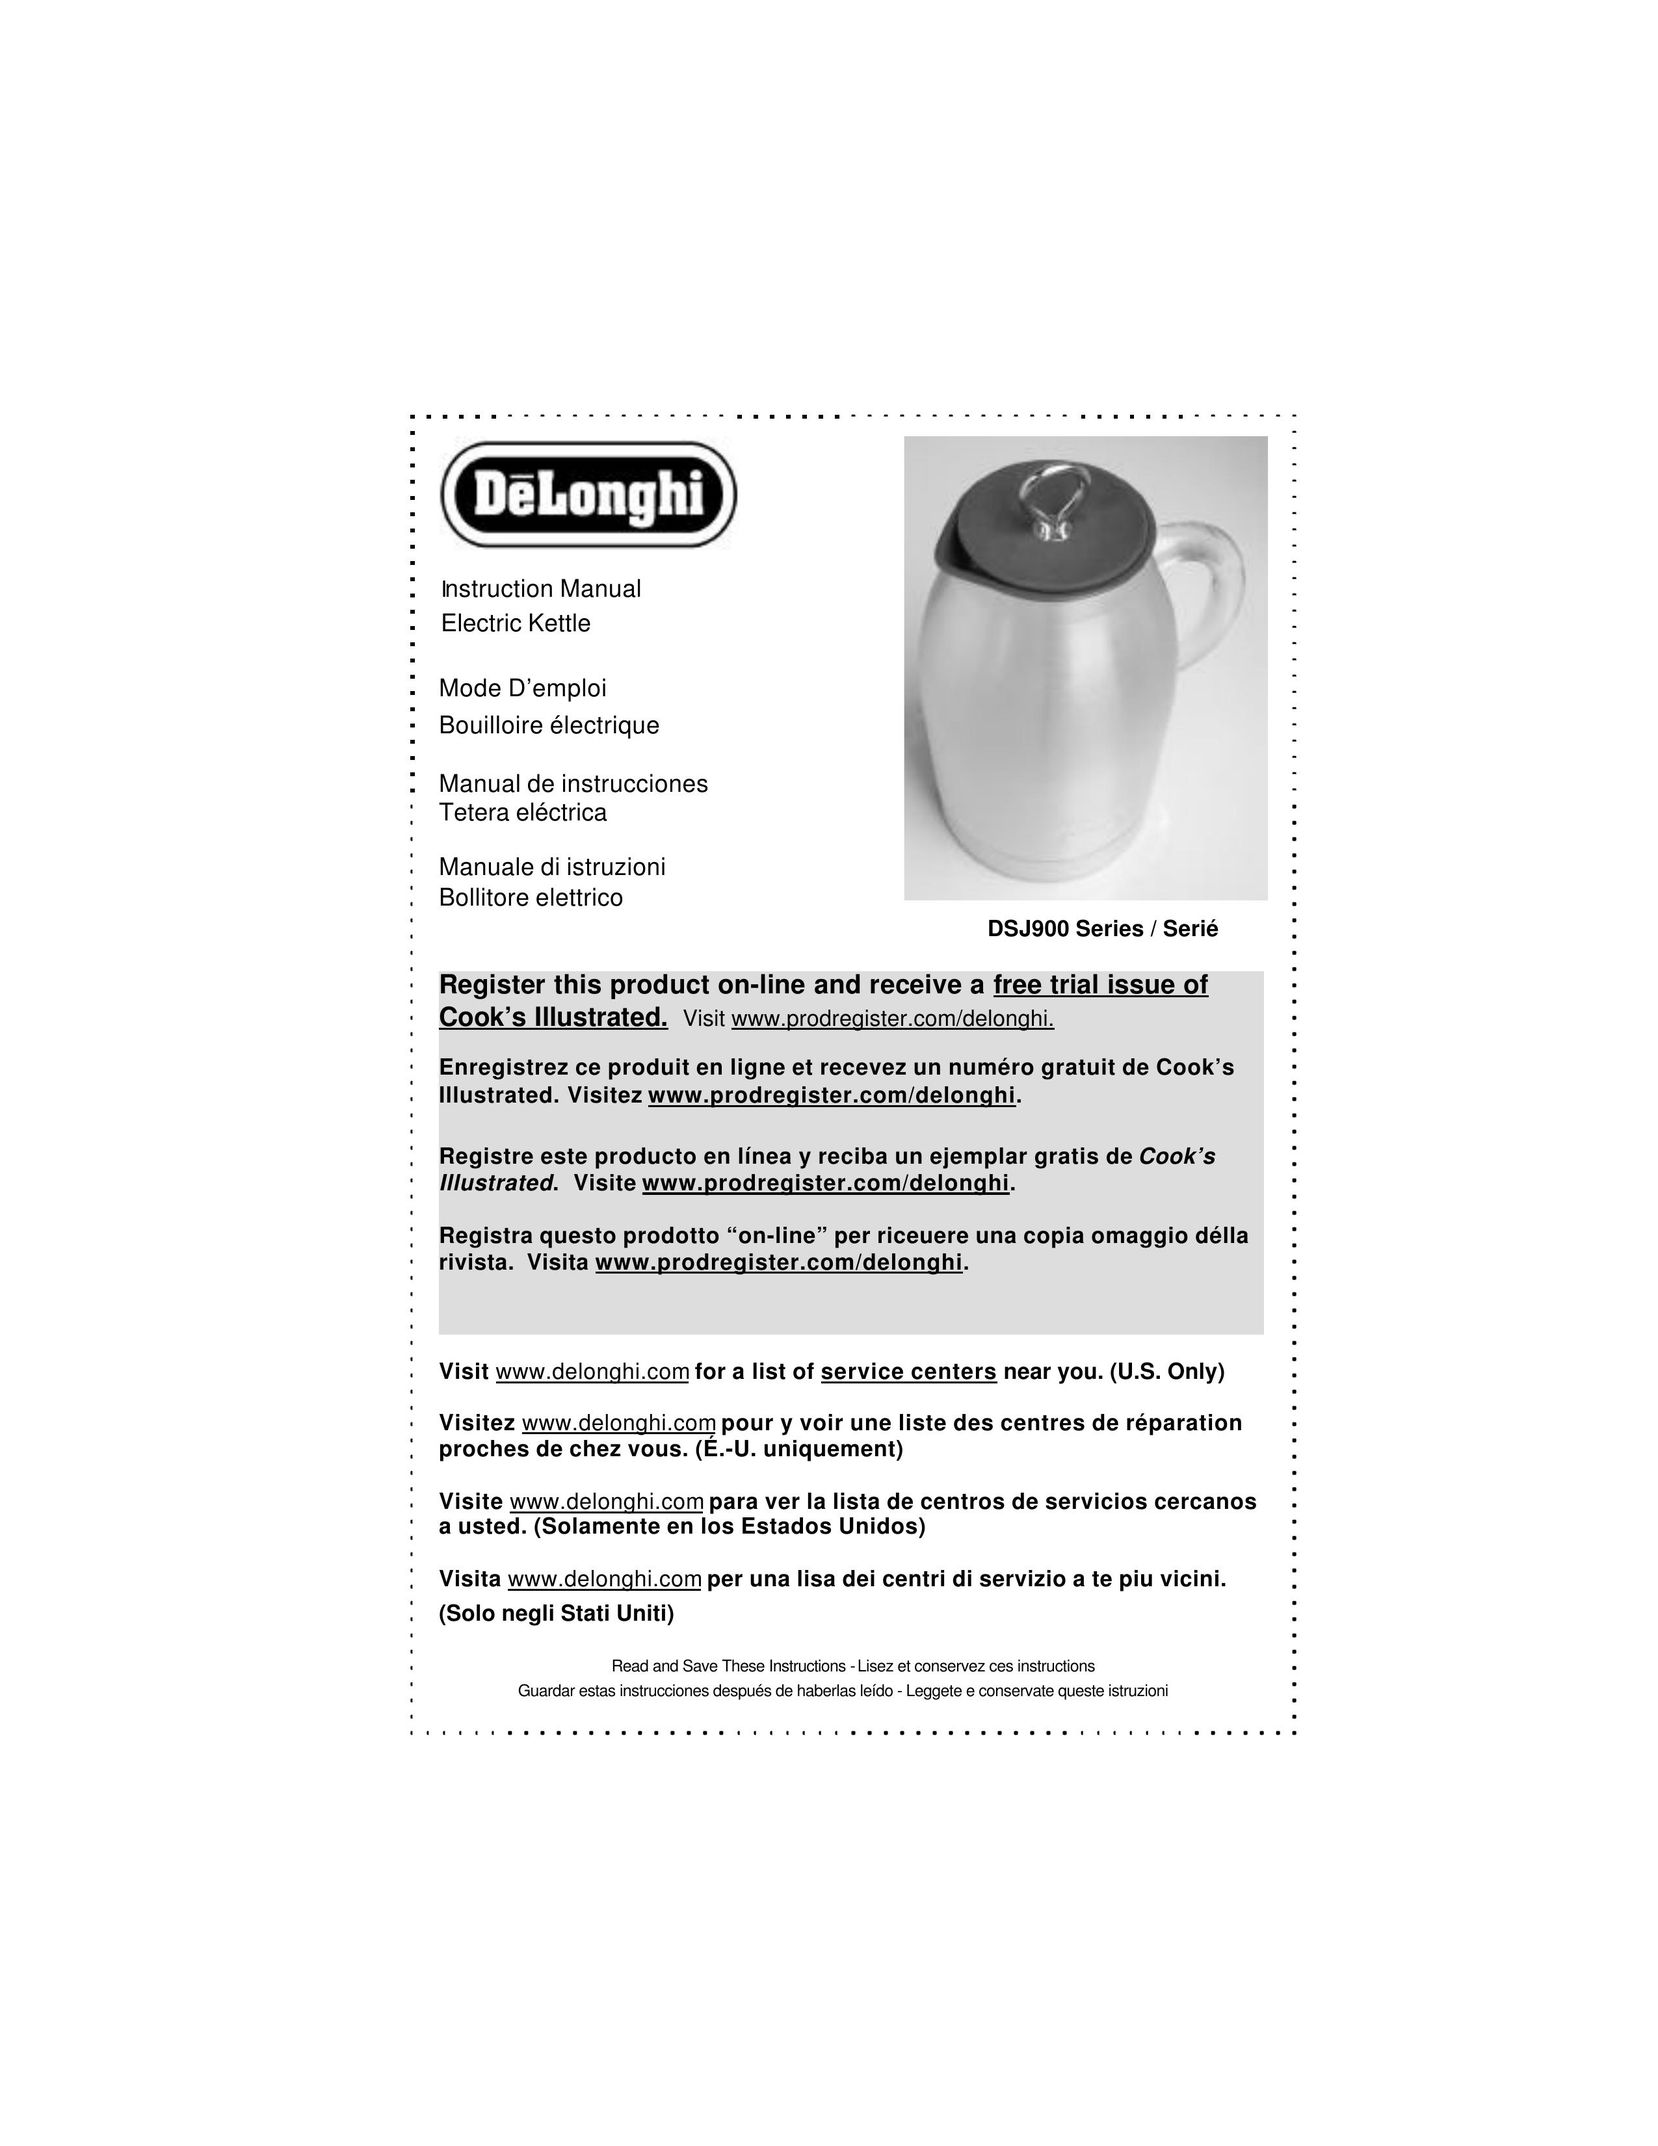 DeLonghi DSJ900 Hot Beverage Maker User Manual